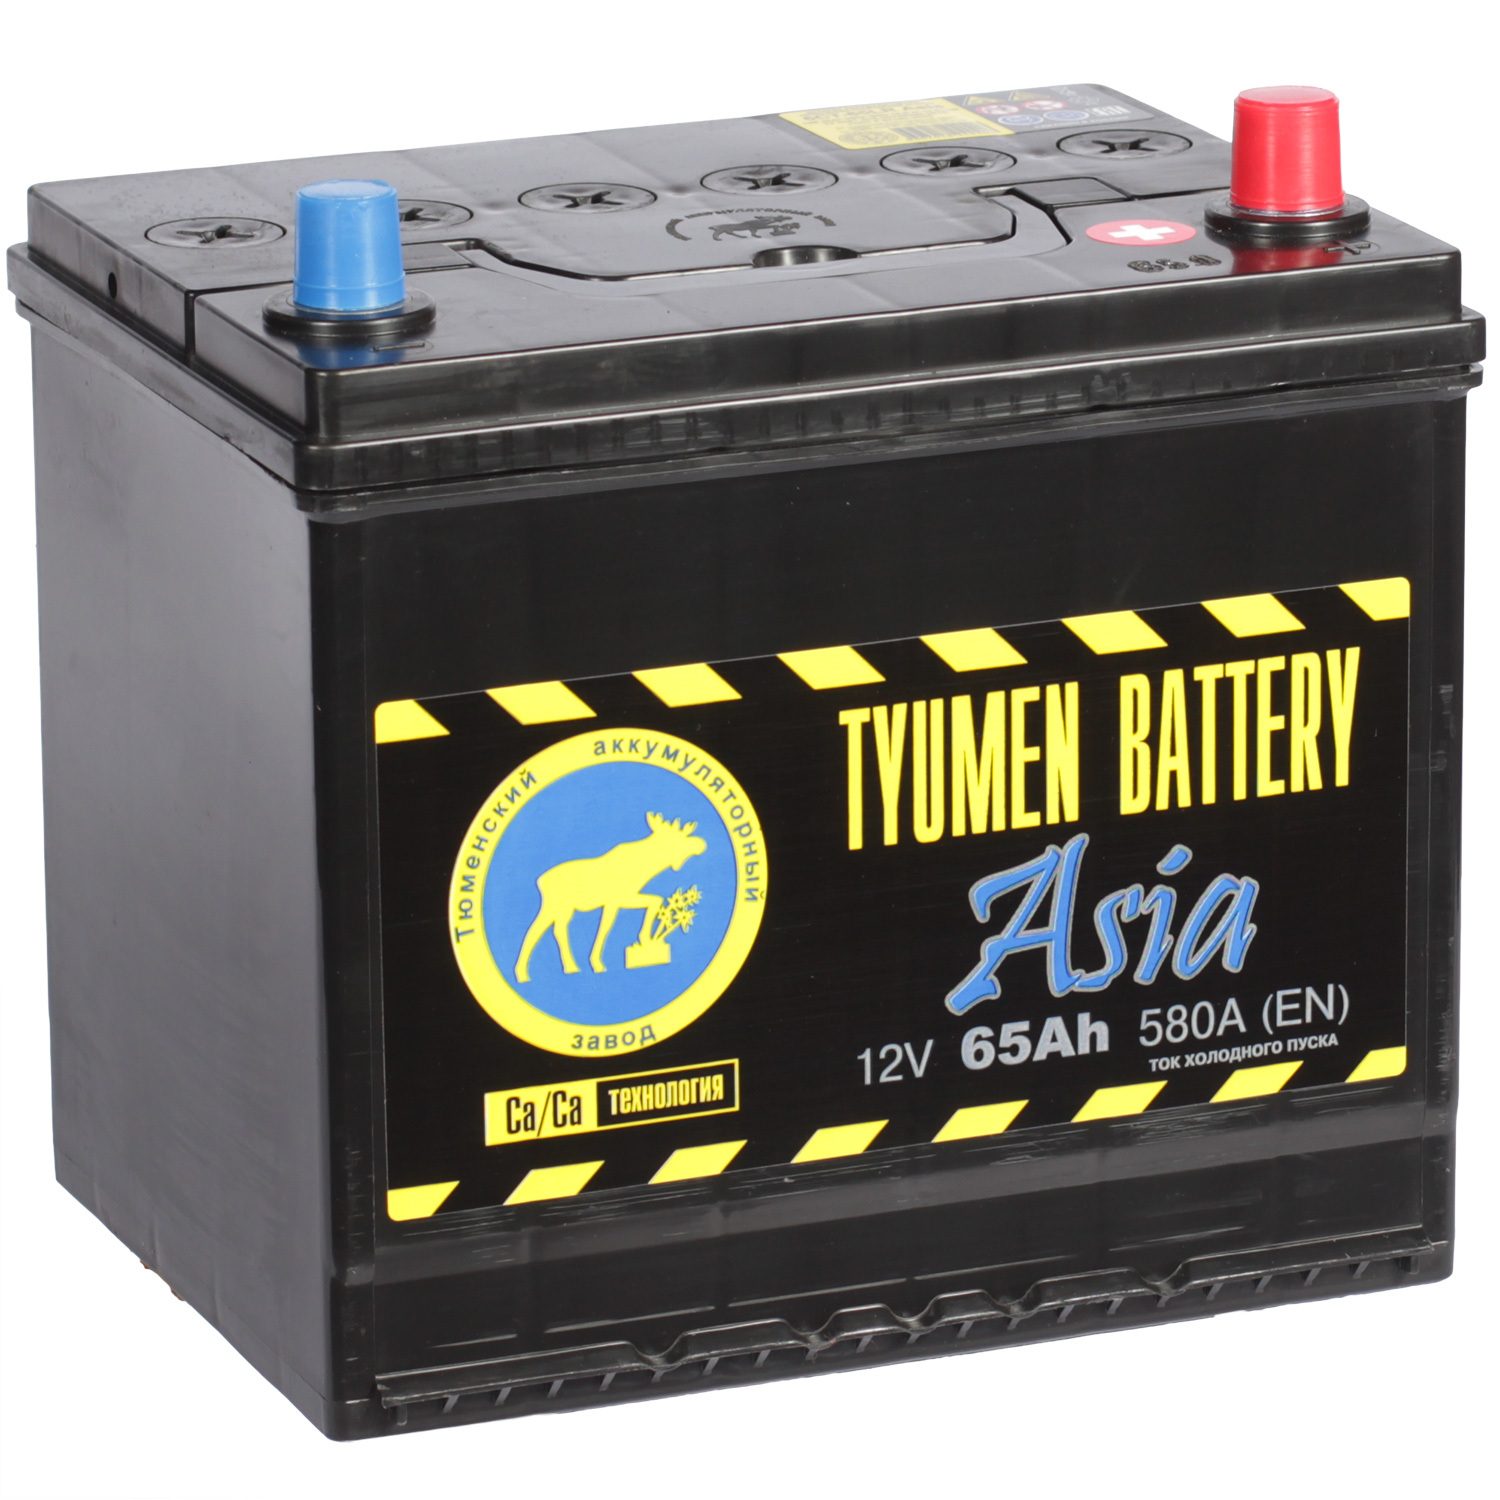 Tyumen Battery Автомобильный аккумулятор Tyumen Battery Asia 65 Ач обратная полярность D23L tyumen battery автомобильный аккумулятор tyumen battery 65 ач обратная полярность d23l